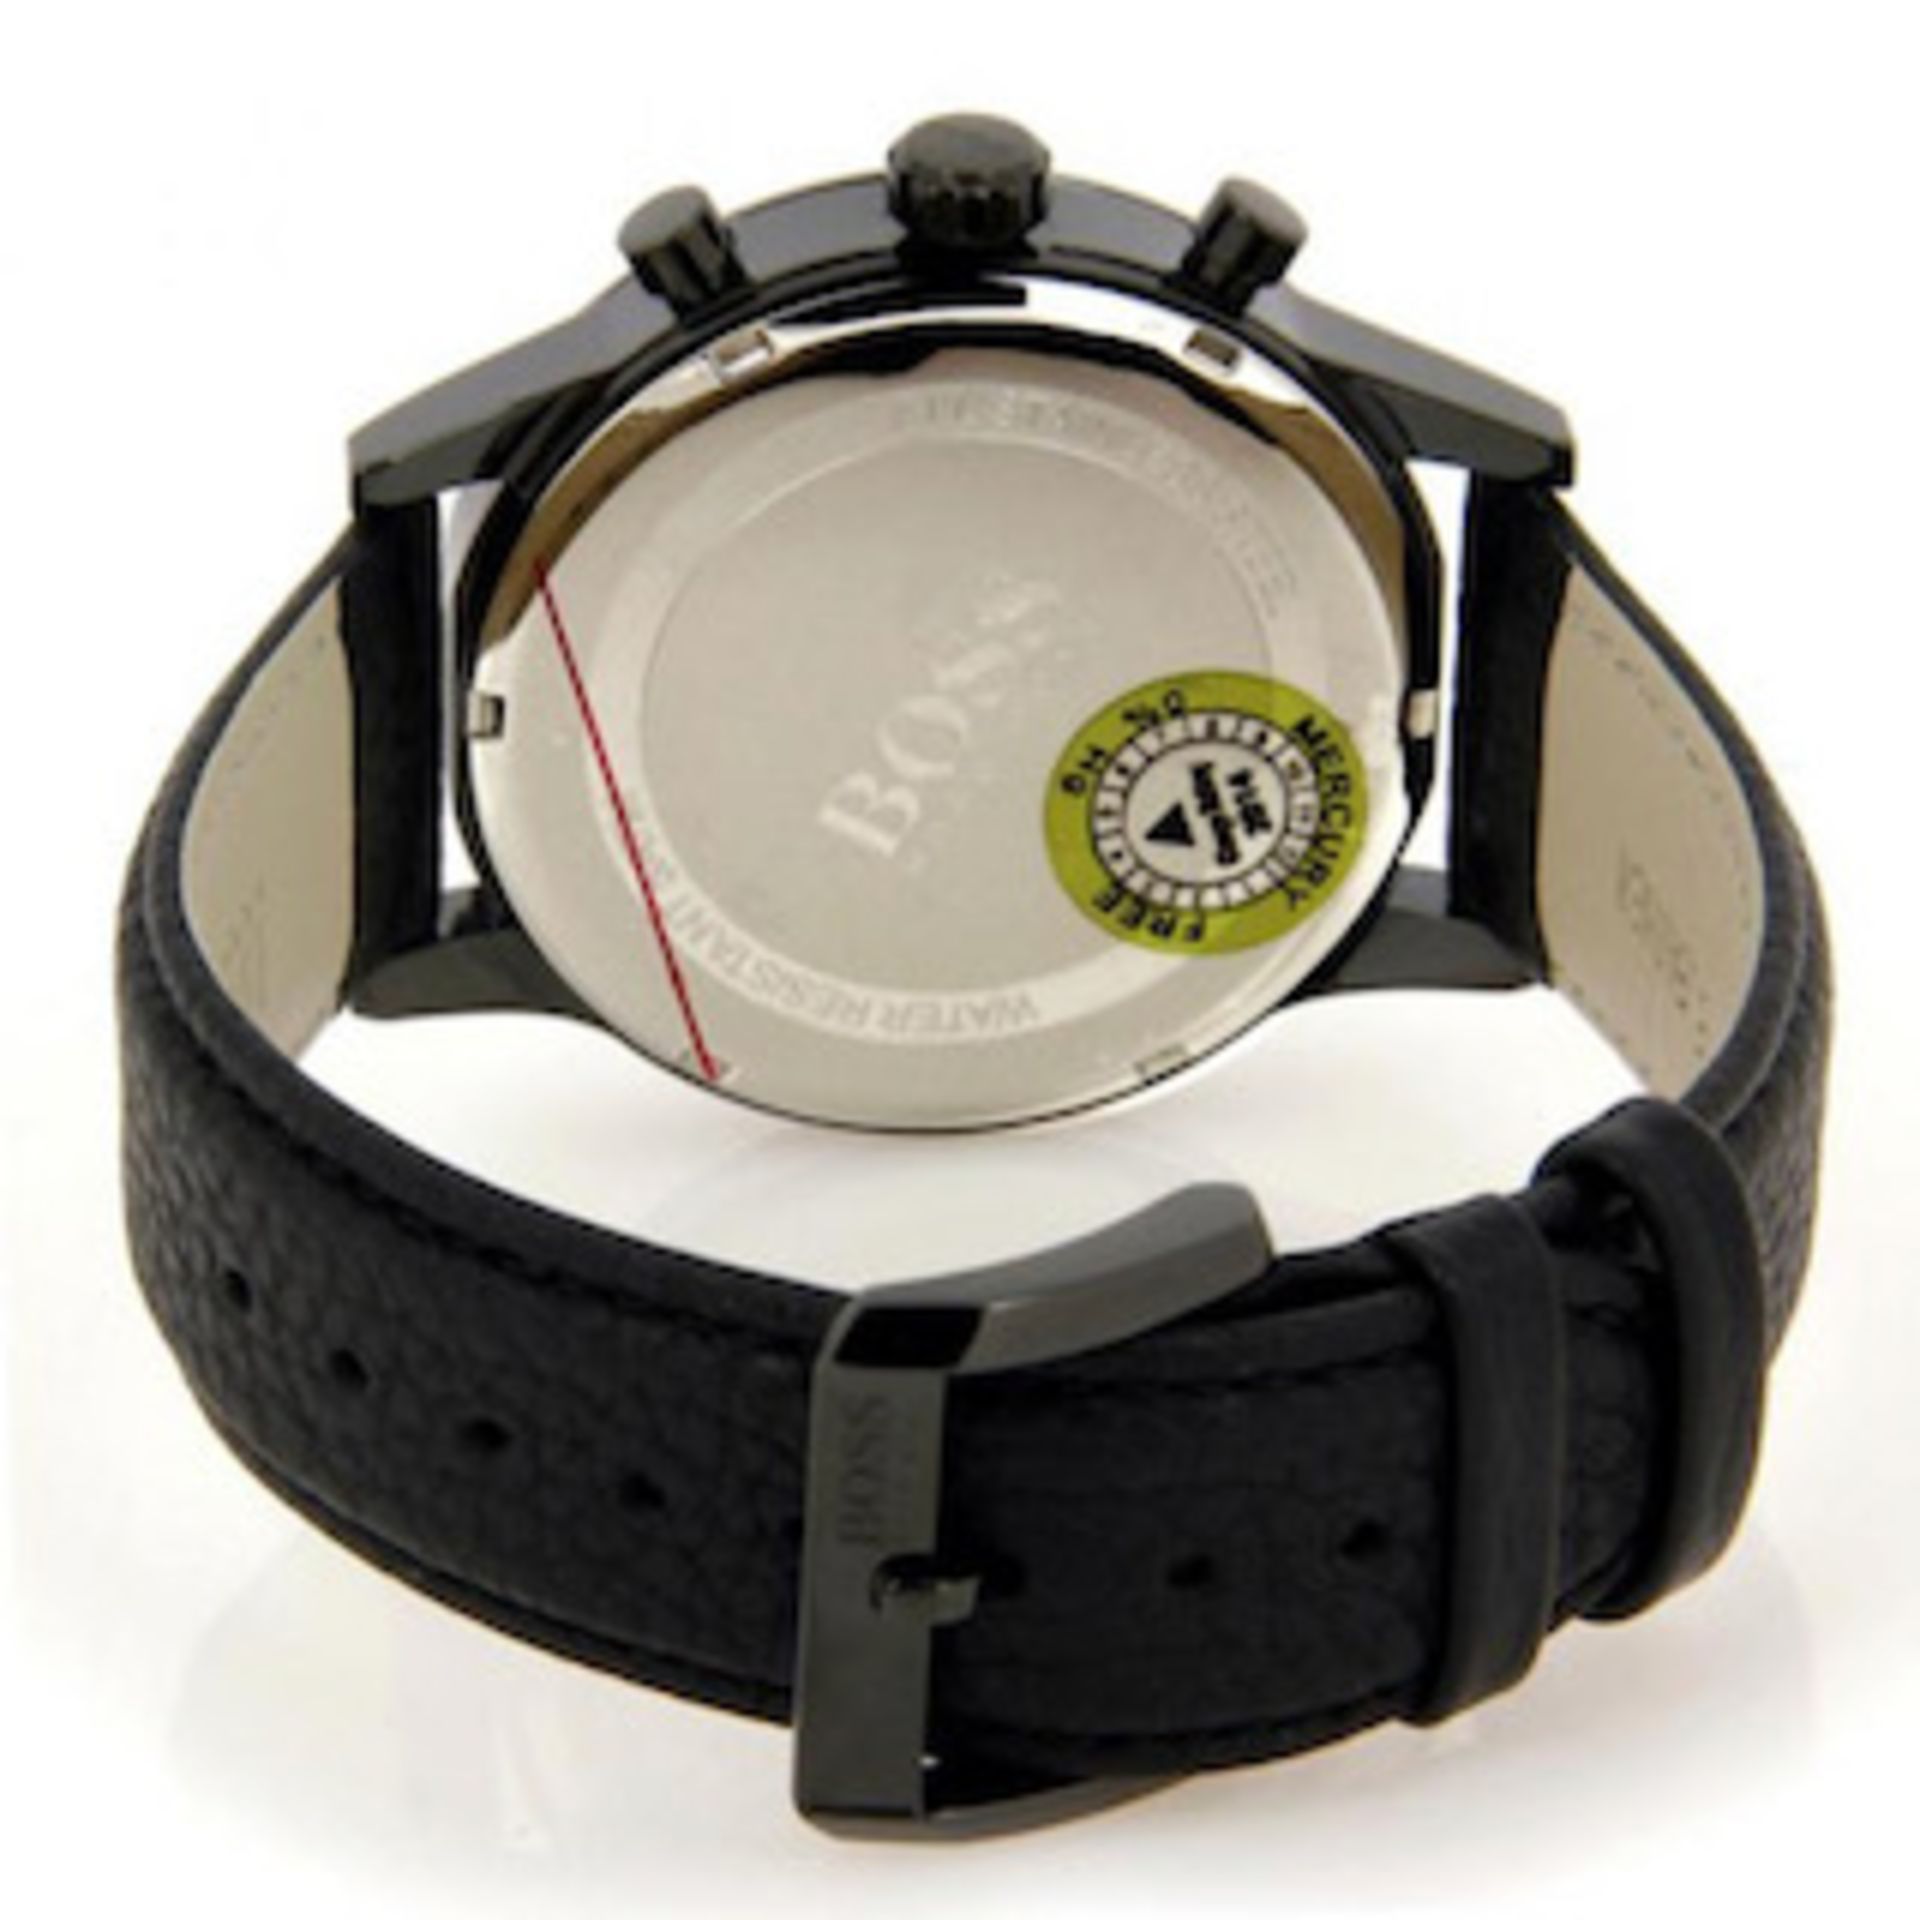 Hugo Boss 1512567 Men's Aeroliner Black Dial Black Leather Strap Chronograph Watch - Image 5 of 5